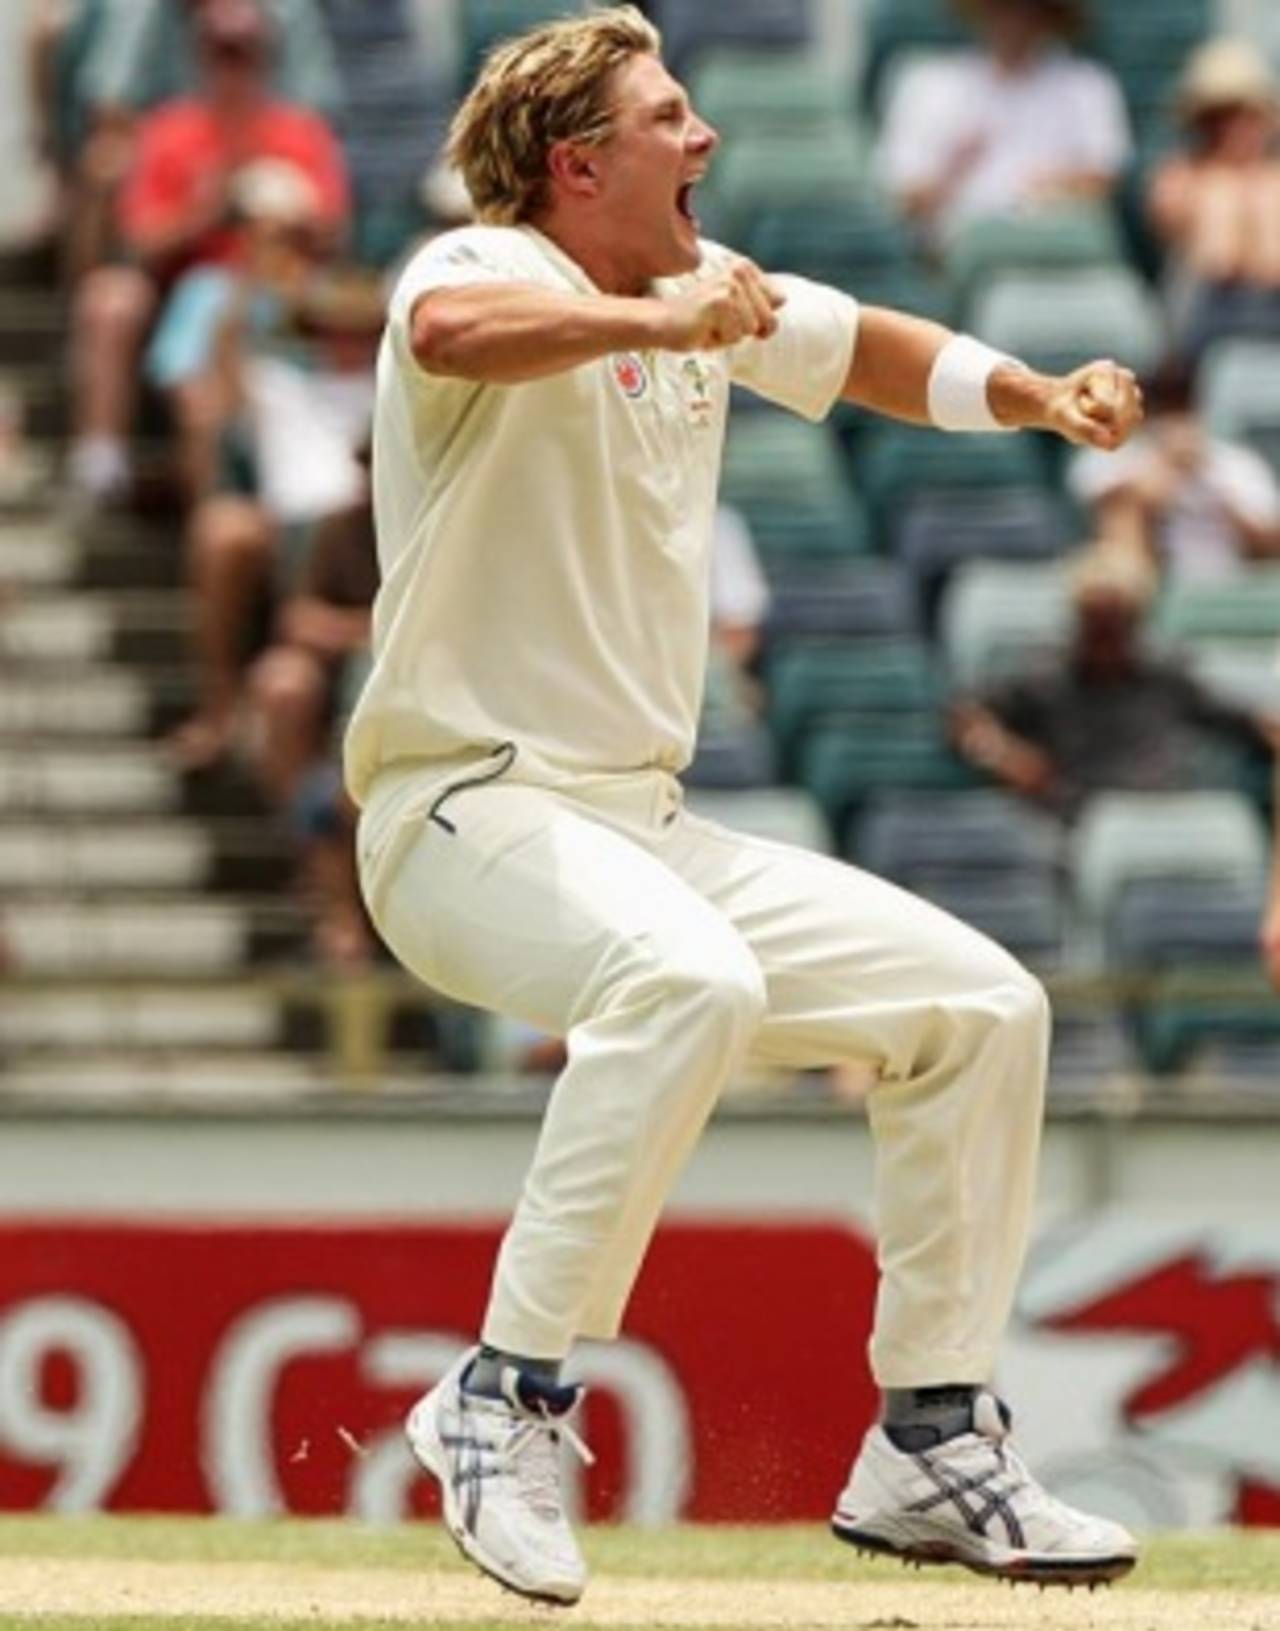 Shane Watson gets a bit too excited after dismissing Chris Gayle, Australia v West Indies, 3rd Test, Perth, 19 December, 2009